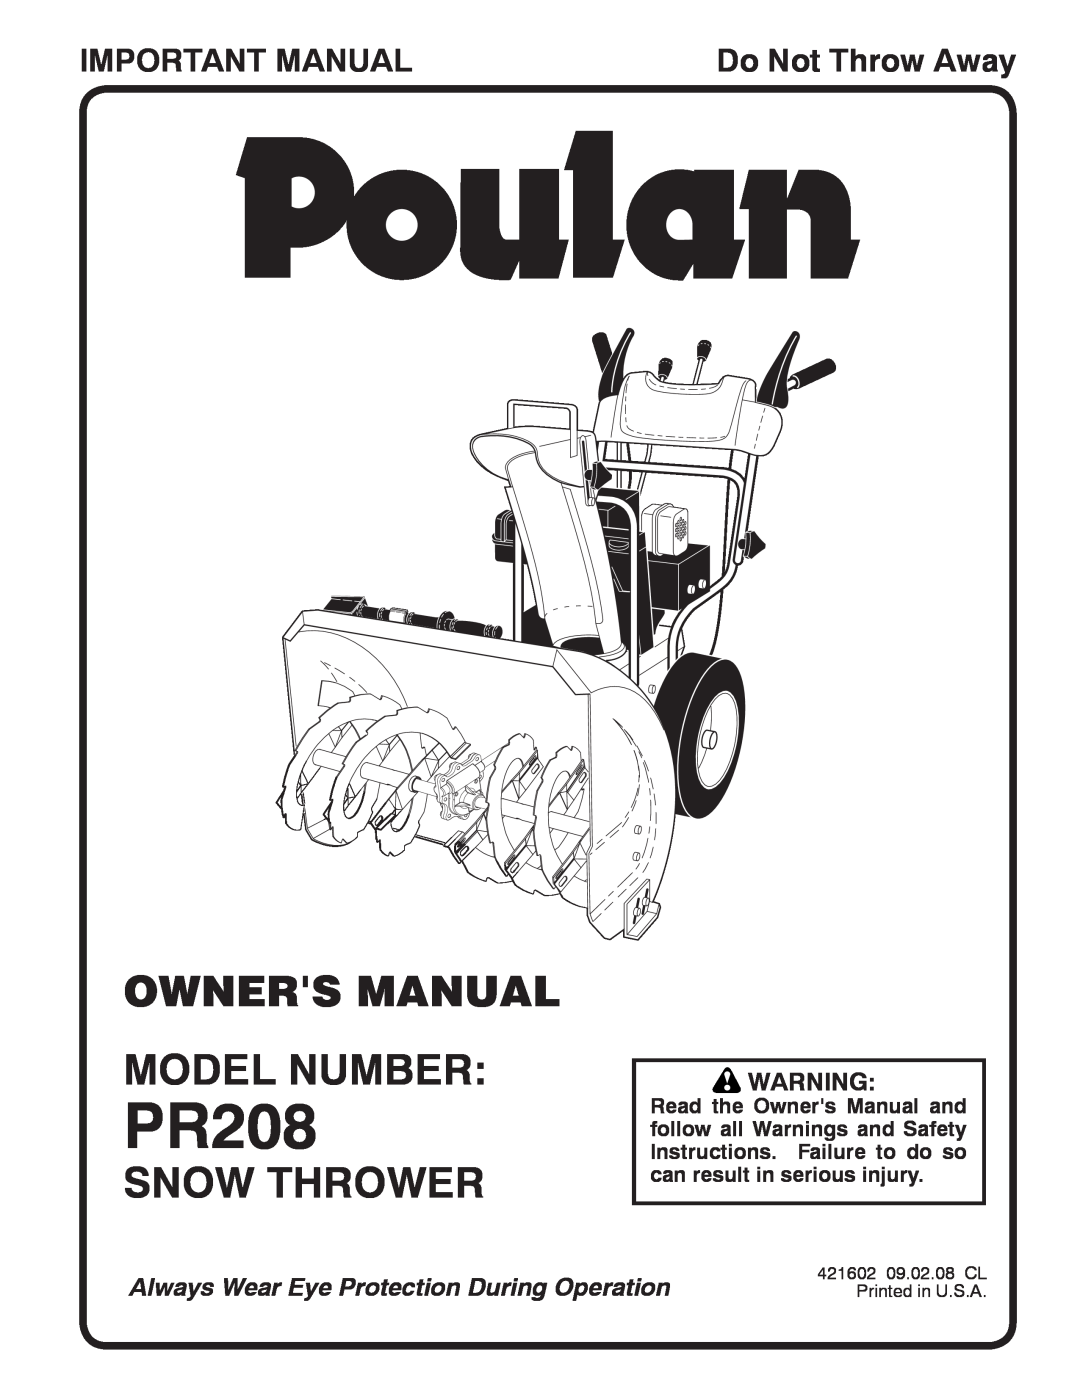 Poulan 421602 owner manual Snow Thrower, Important Manual, PR208, Do Not Throw Away 